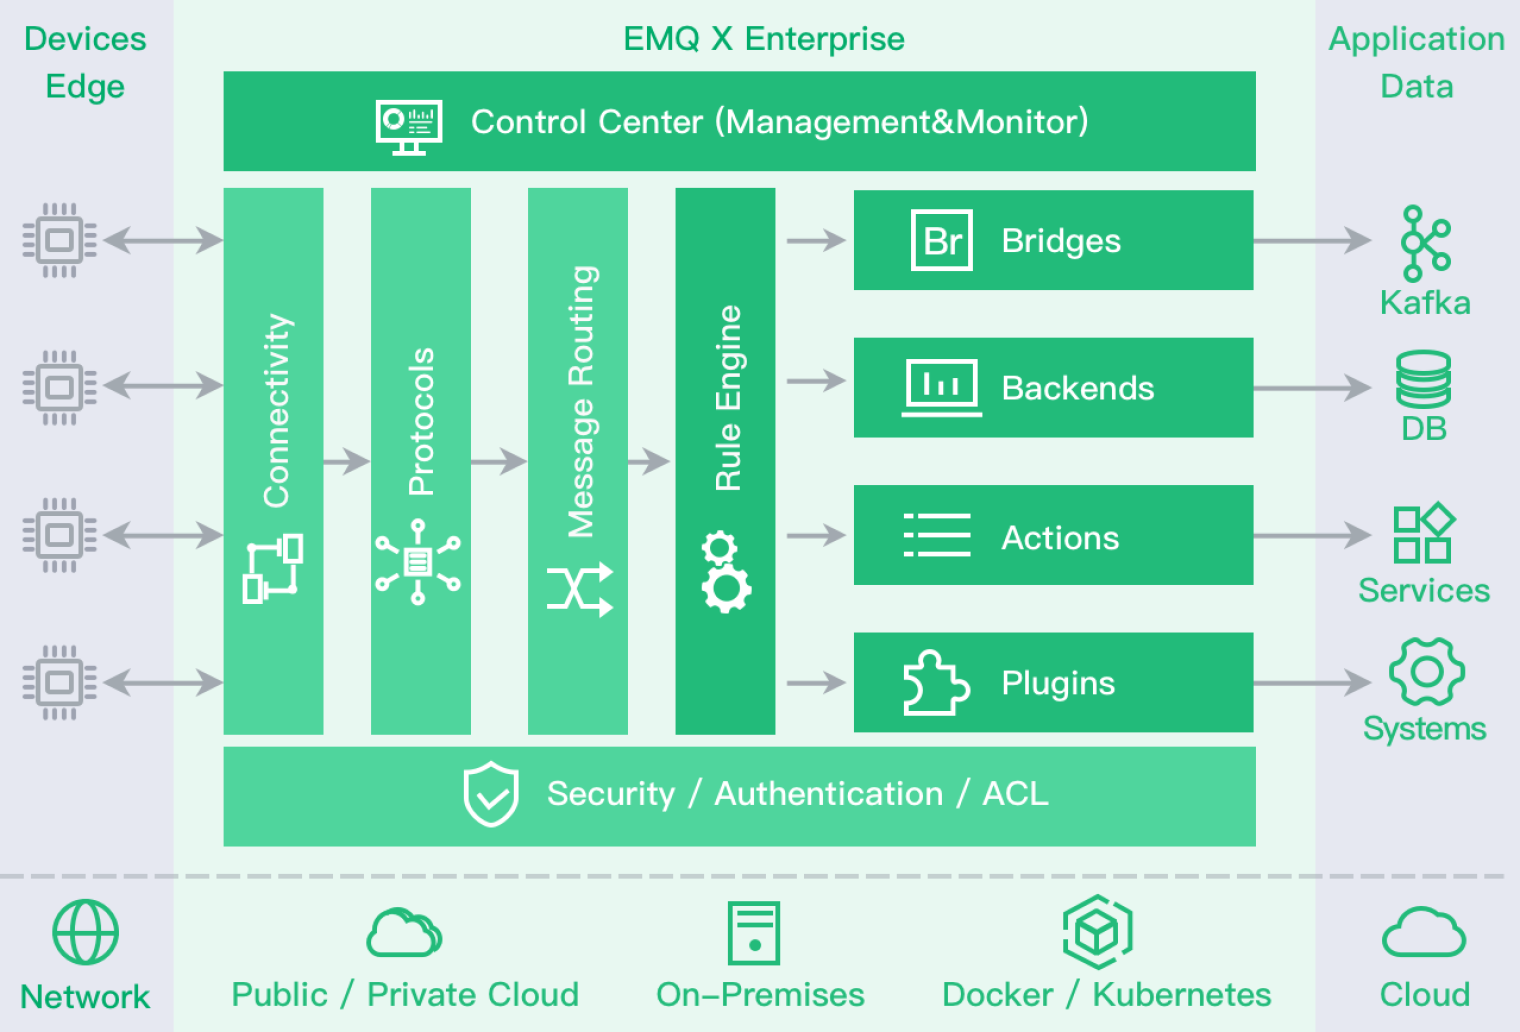 EMQX Enterprise